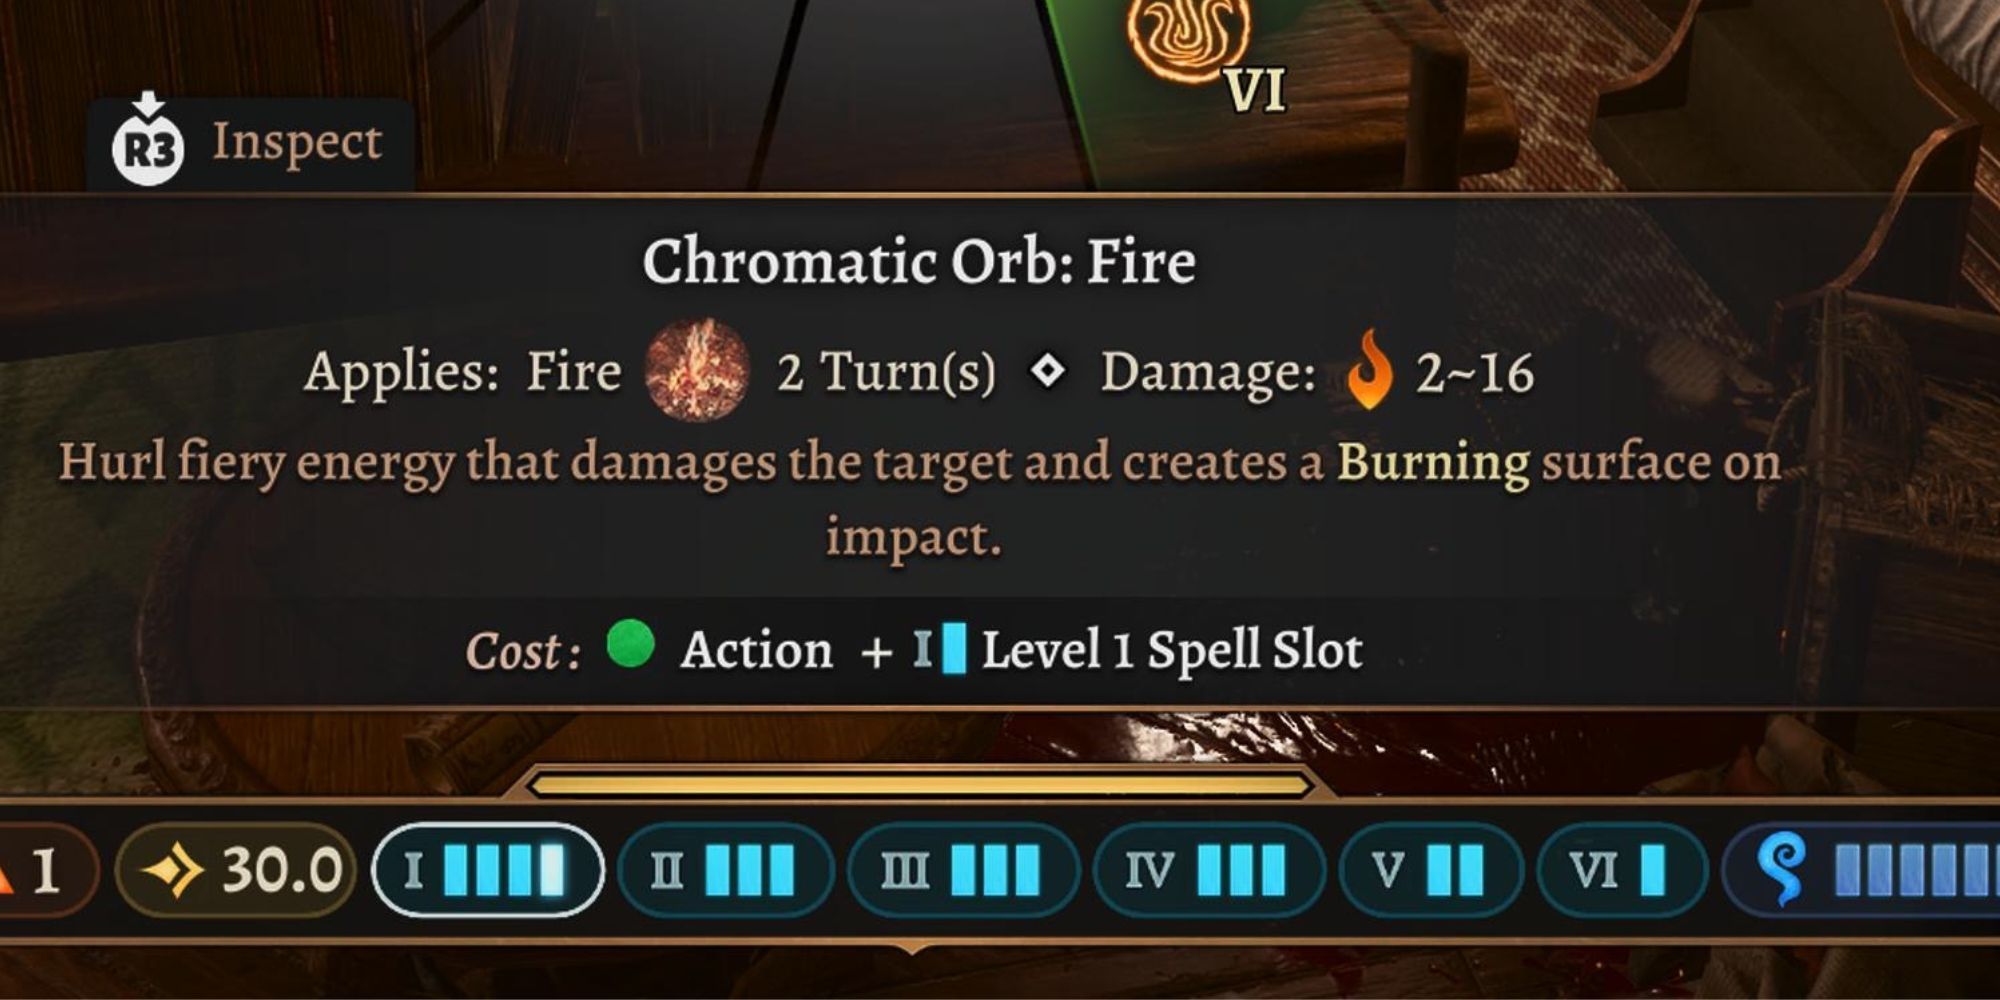 Chromatic Orb of Fire in Baldur’s Gate 3